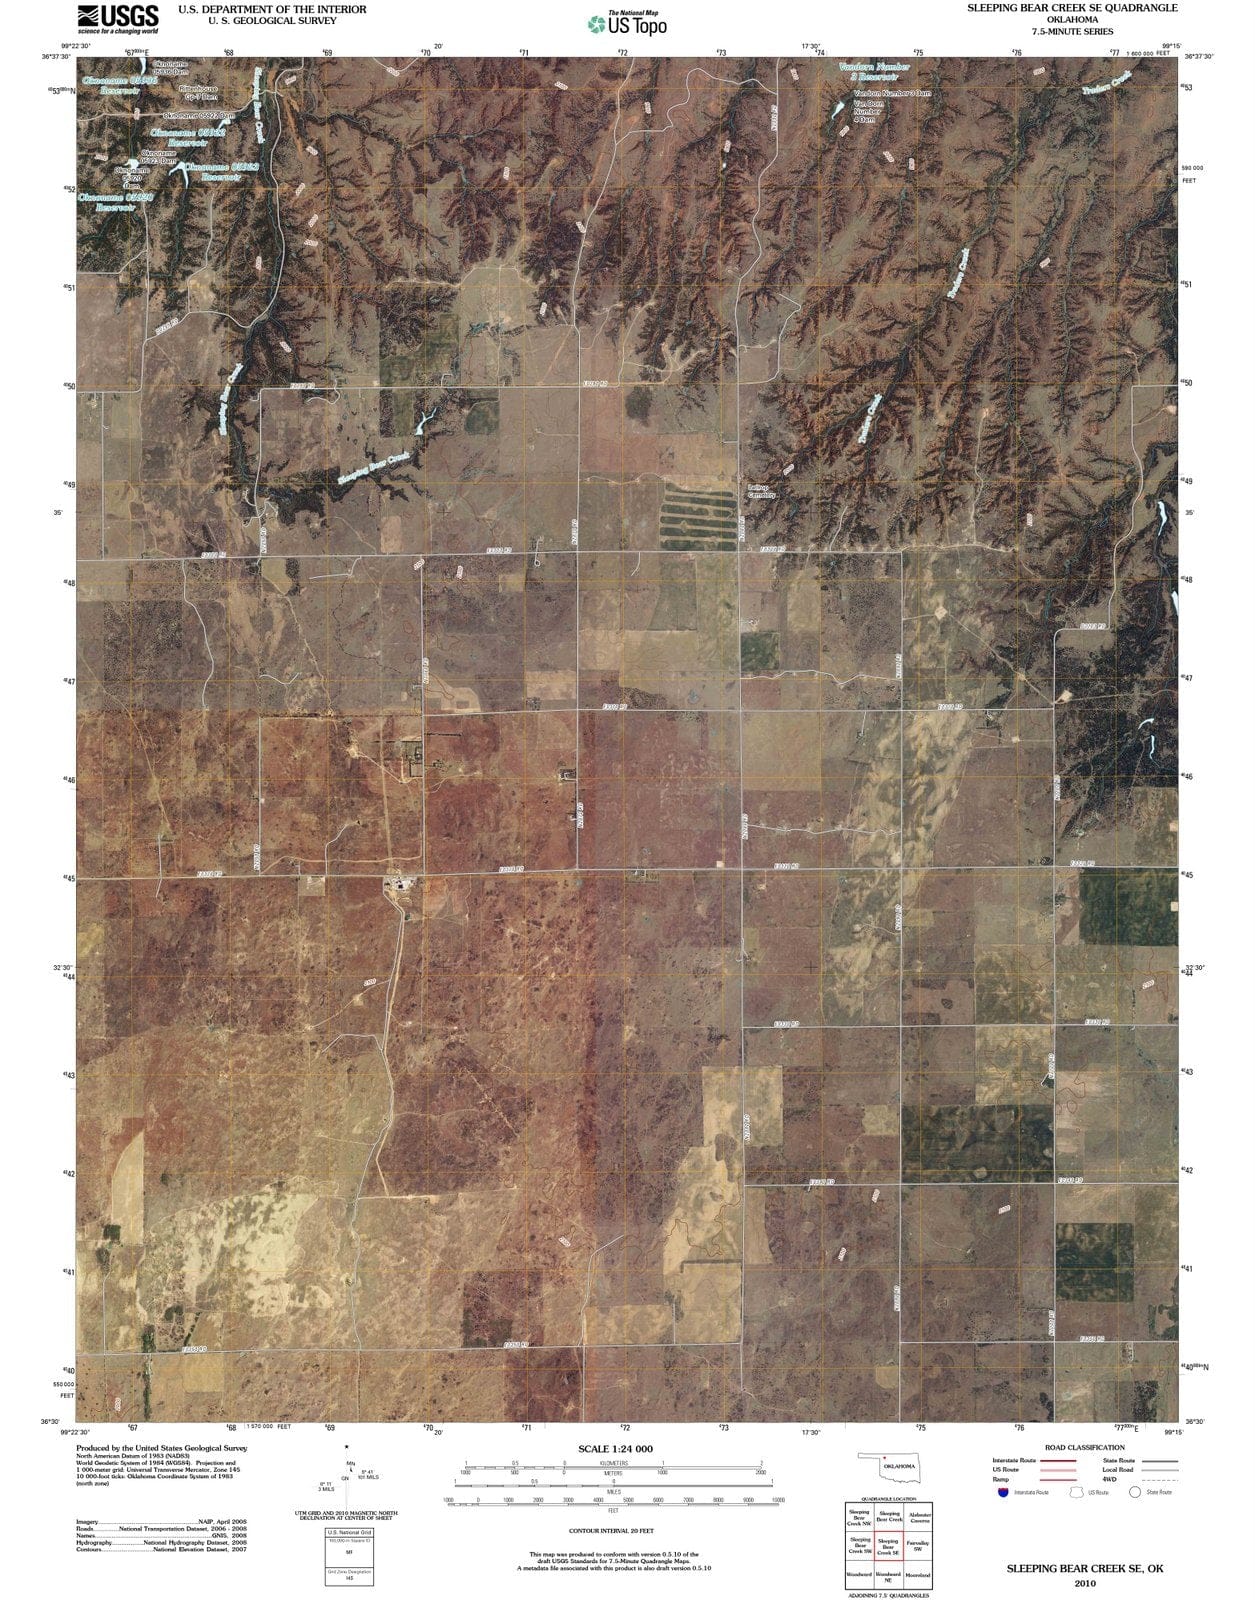 2010 Sleeping Bear Creek, OK - Oklahoma - USGS Topographic Map